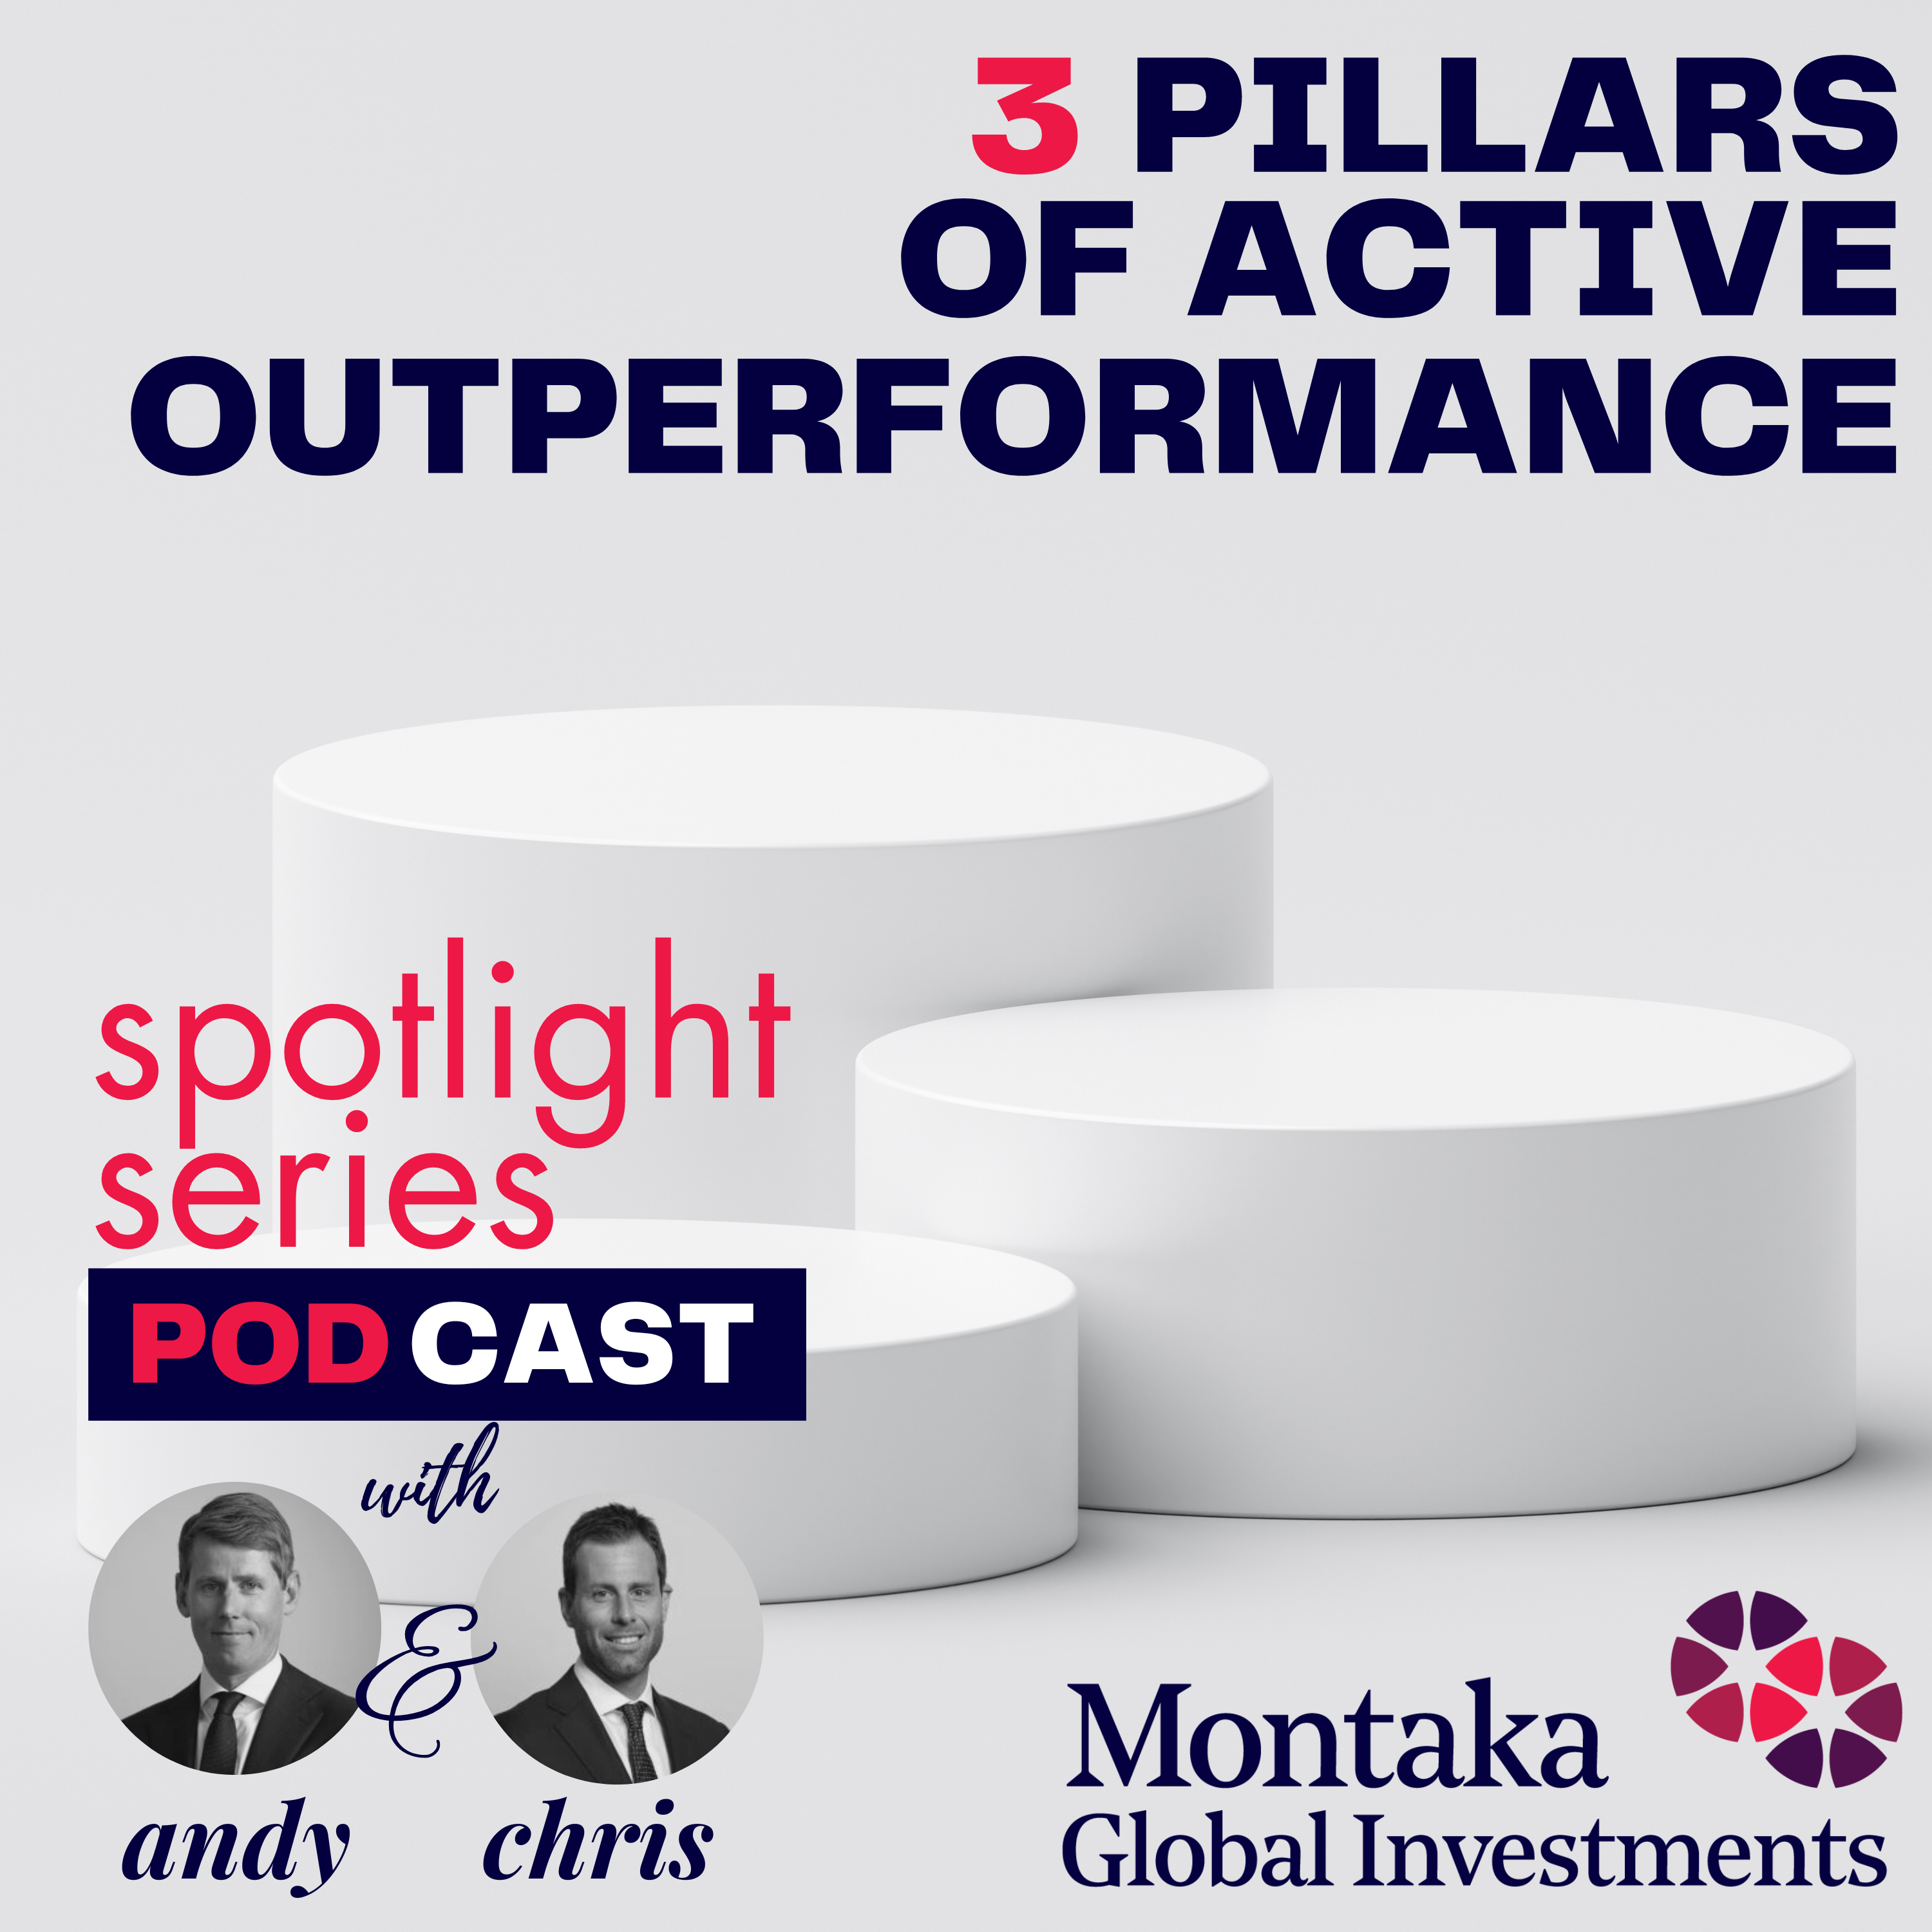 3 Pillars Podcast by Montaka Global